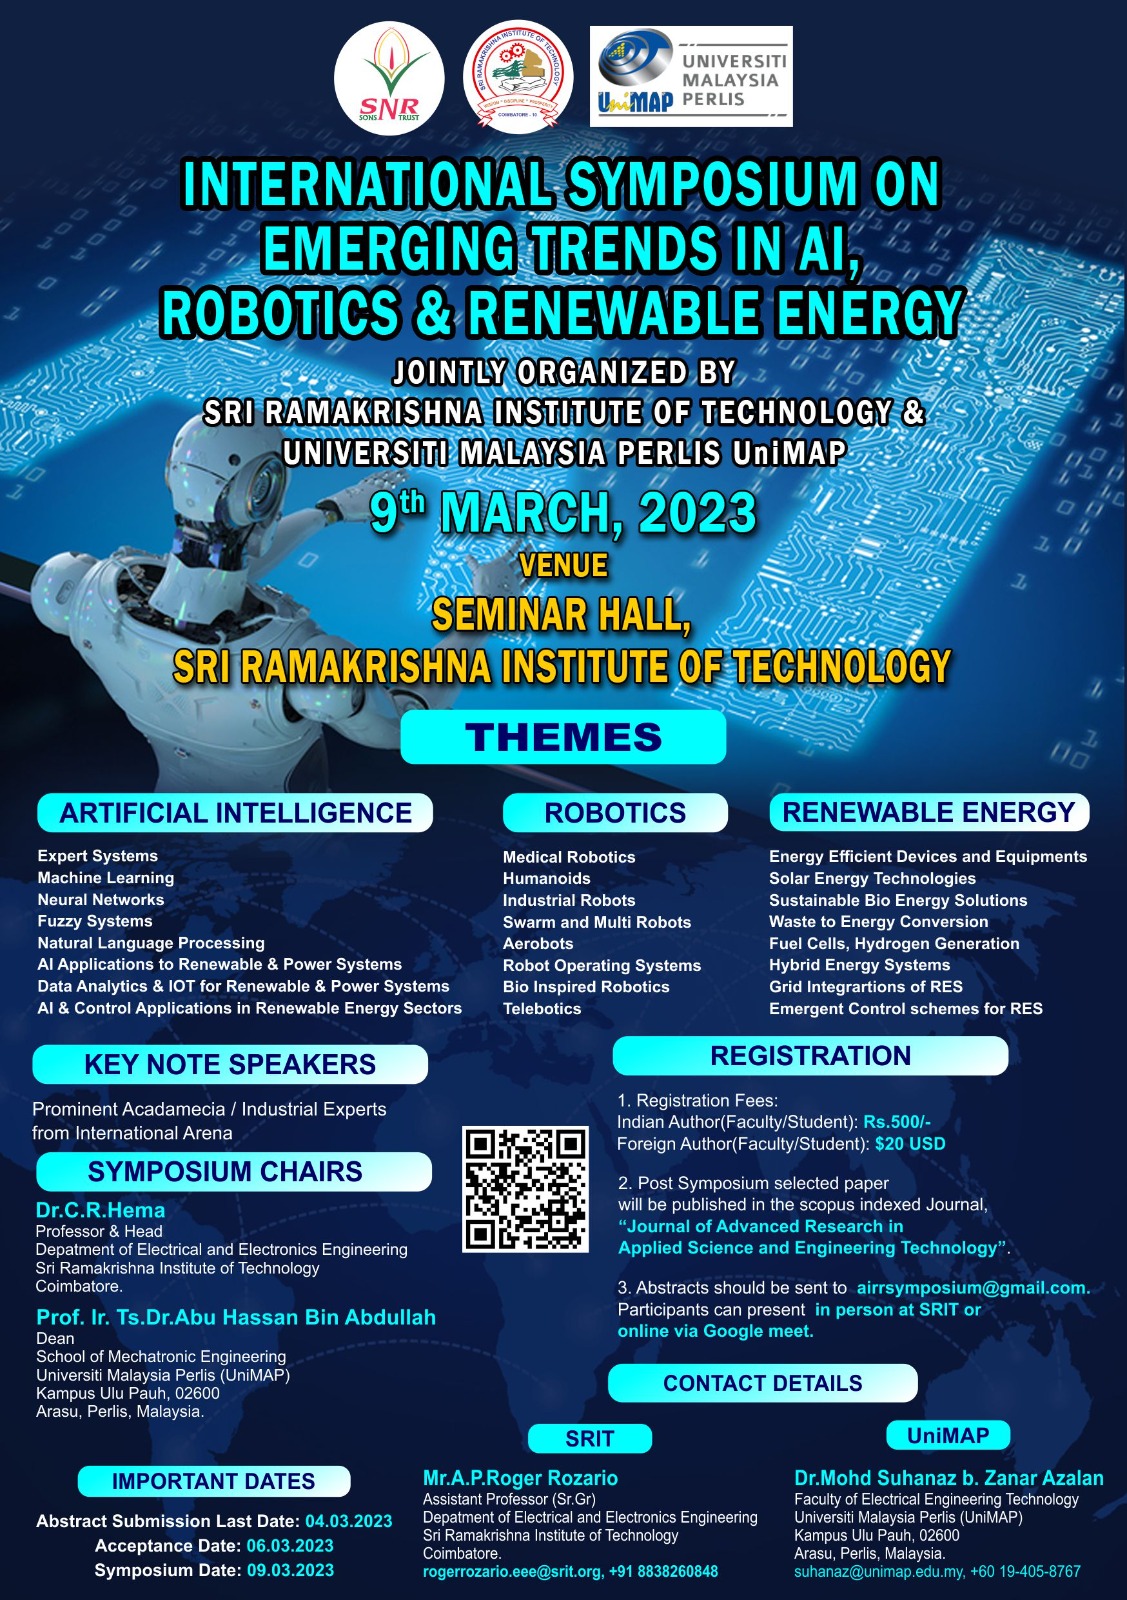 International Symposium on Emerging Trends in AI, Robotics and Renewable Energy 2023